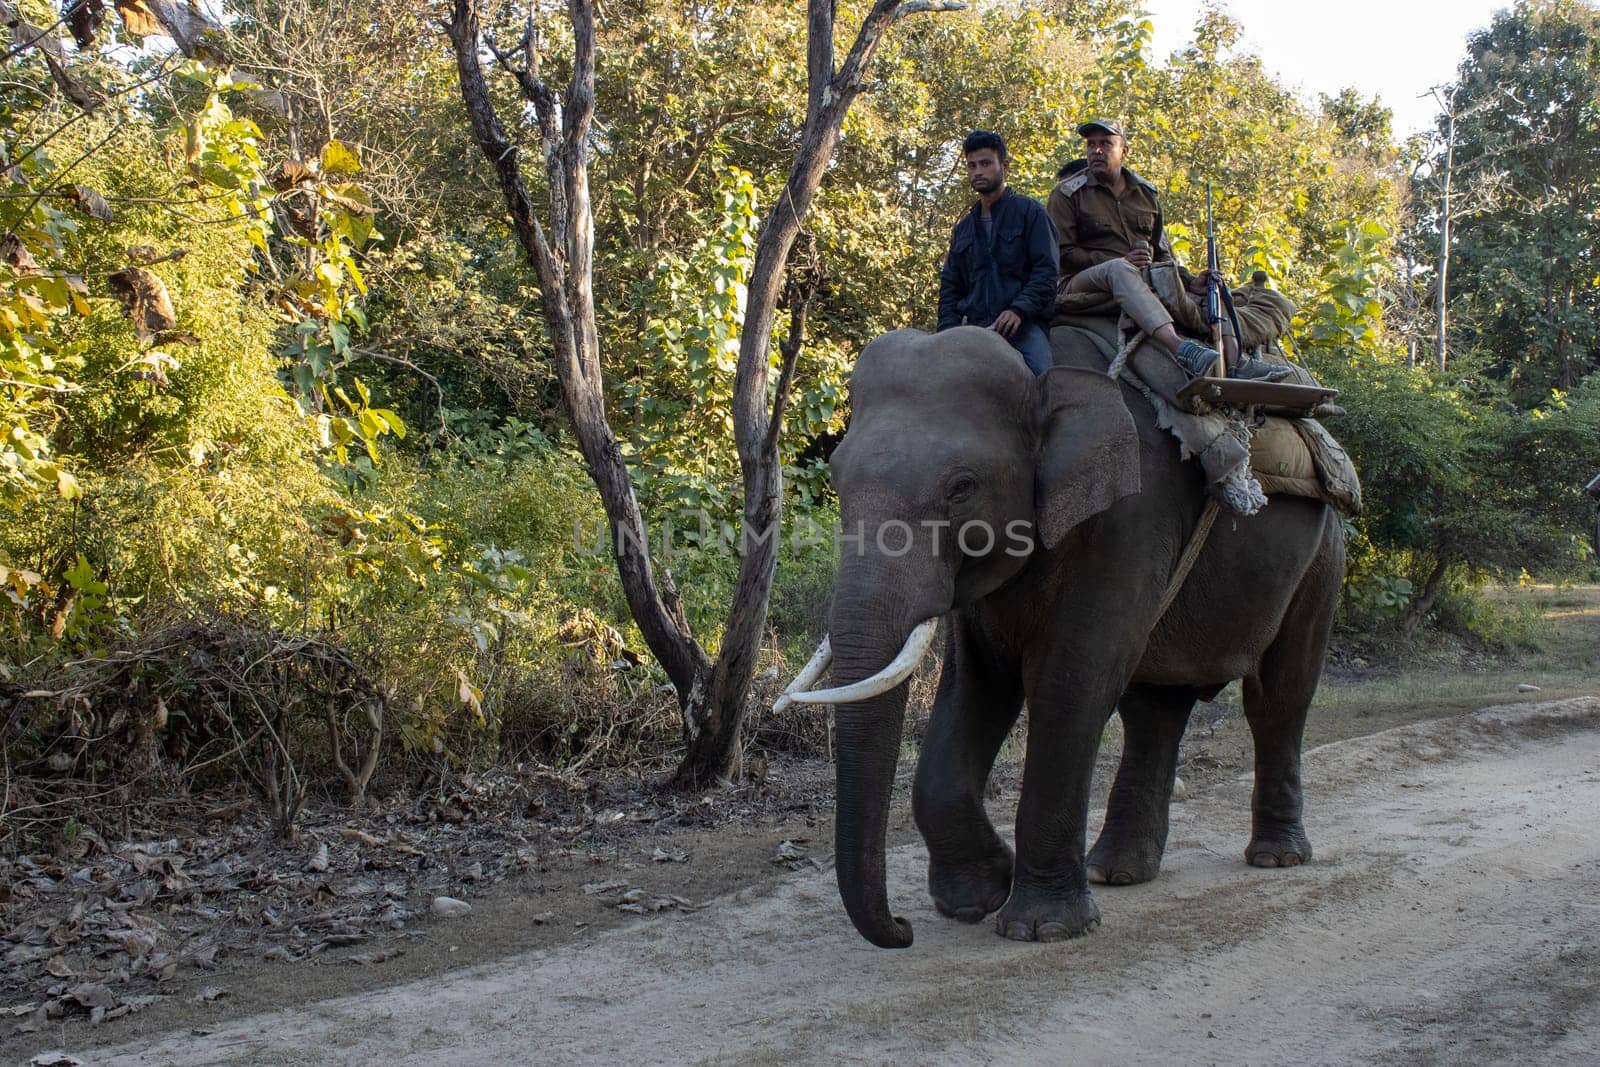 Capturing the Graceful Harmony of Elephants in Uttarakhand's Jungles by stocksvids